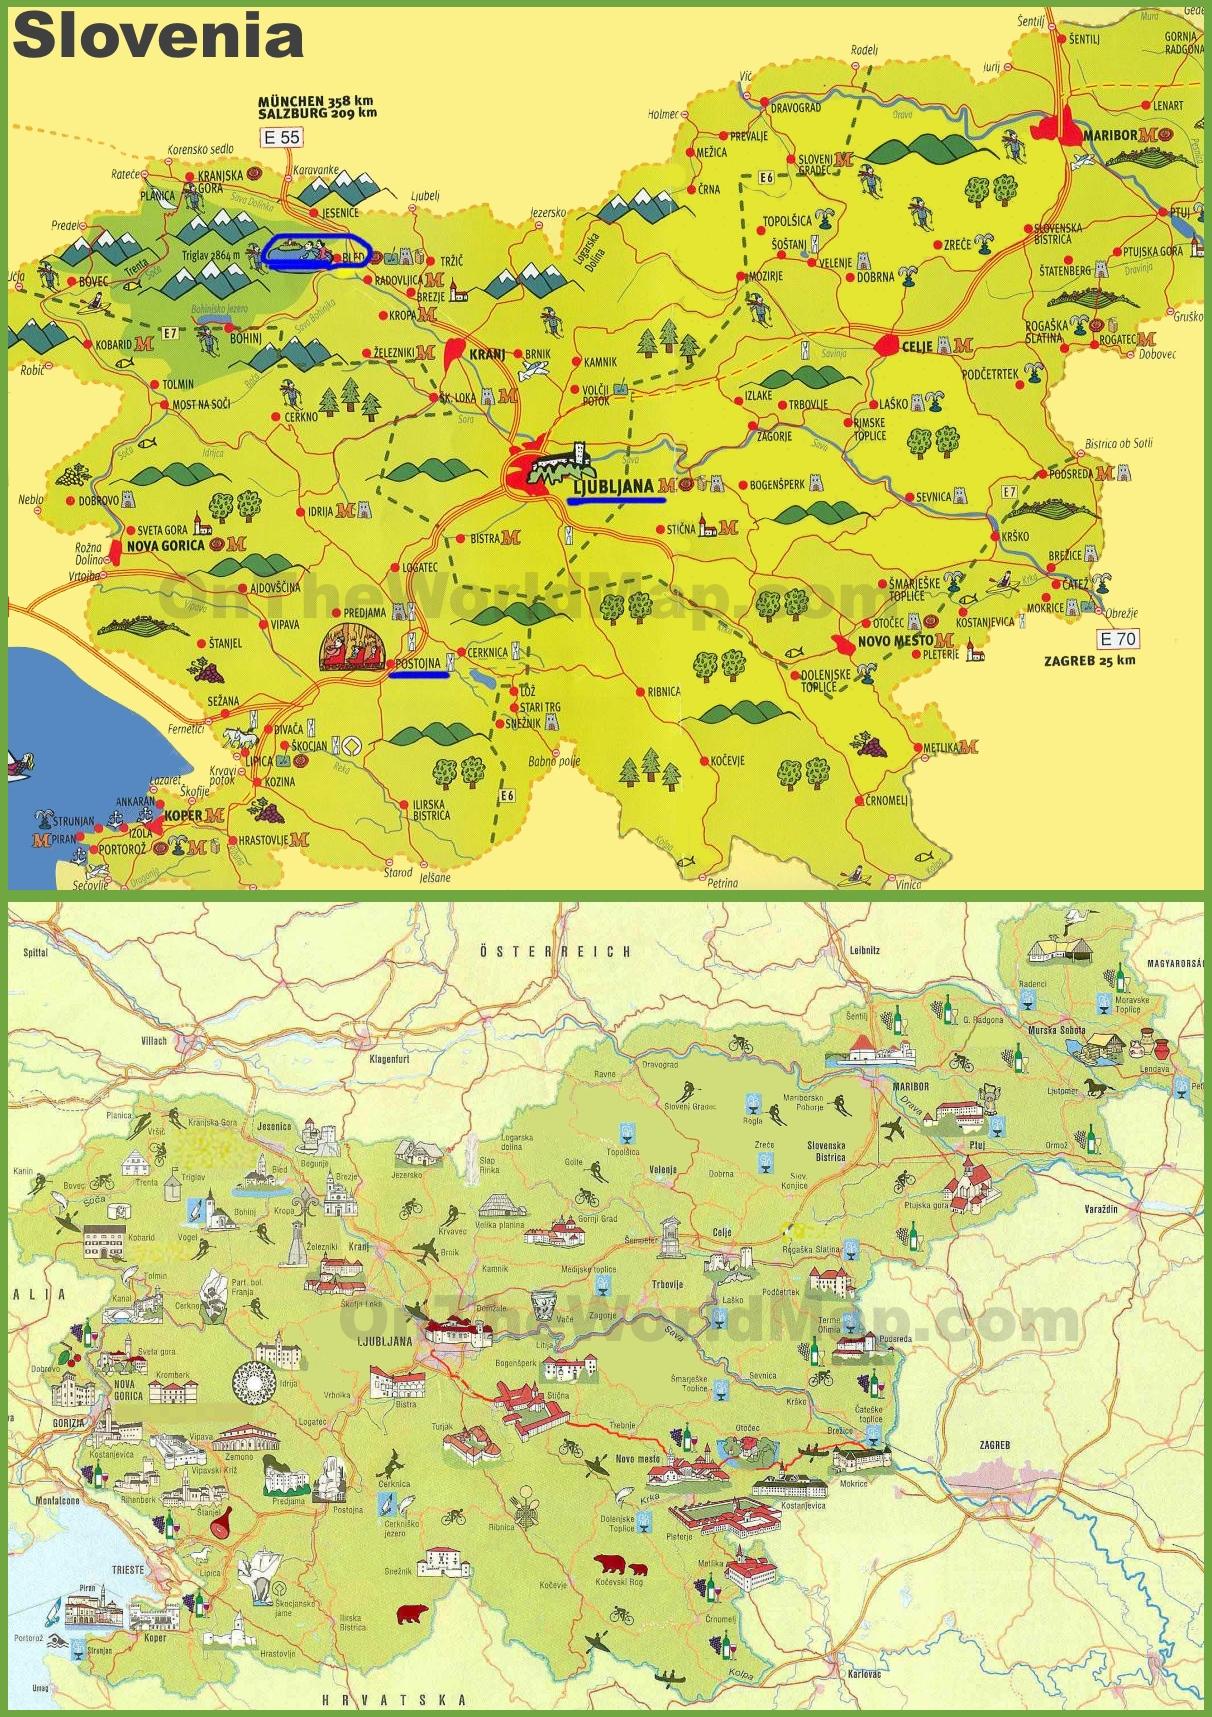 turistična karta slovenije Slovenija Turisticna Karta Slovenija Potovanja Zemljevidu Juzni Evropi Evropa turistična karta slovenije